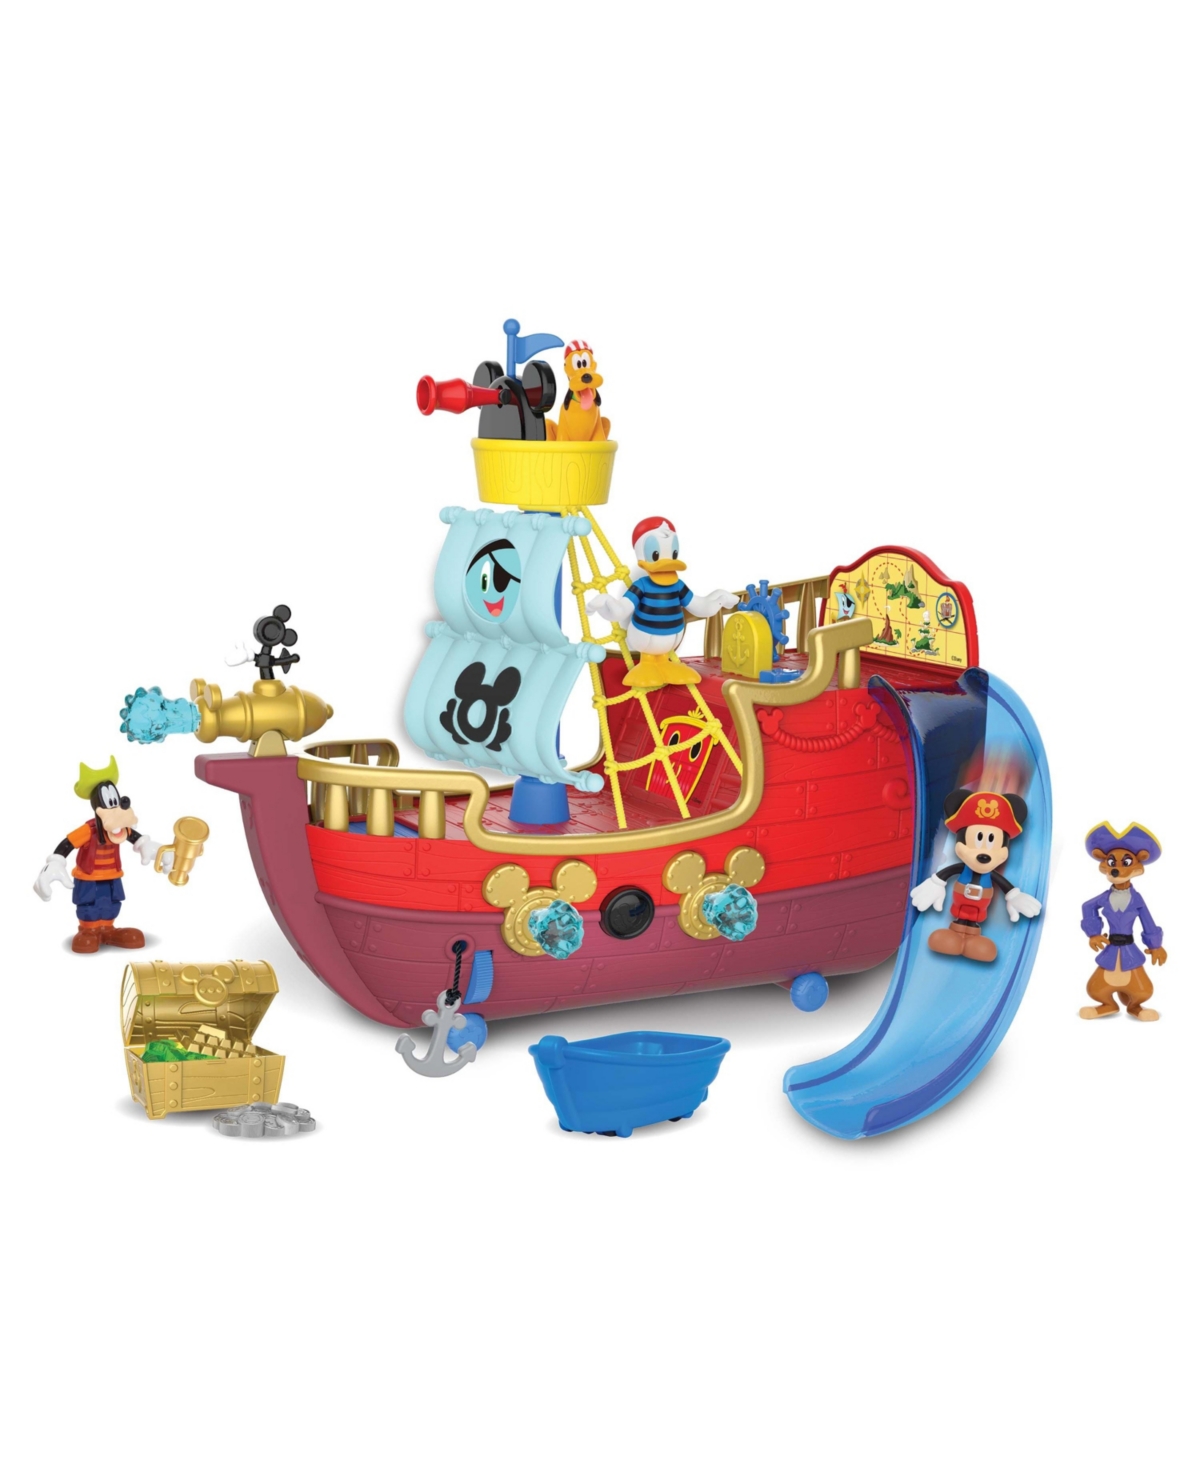 Sesame Street Kids' Pirate Ship Set, 15 Piece In Multi